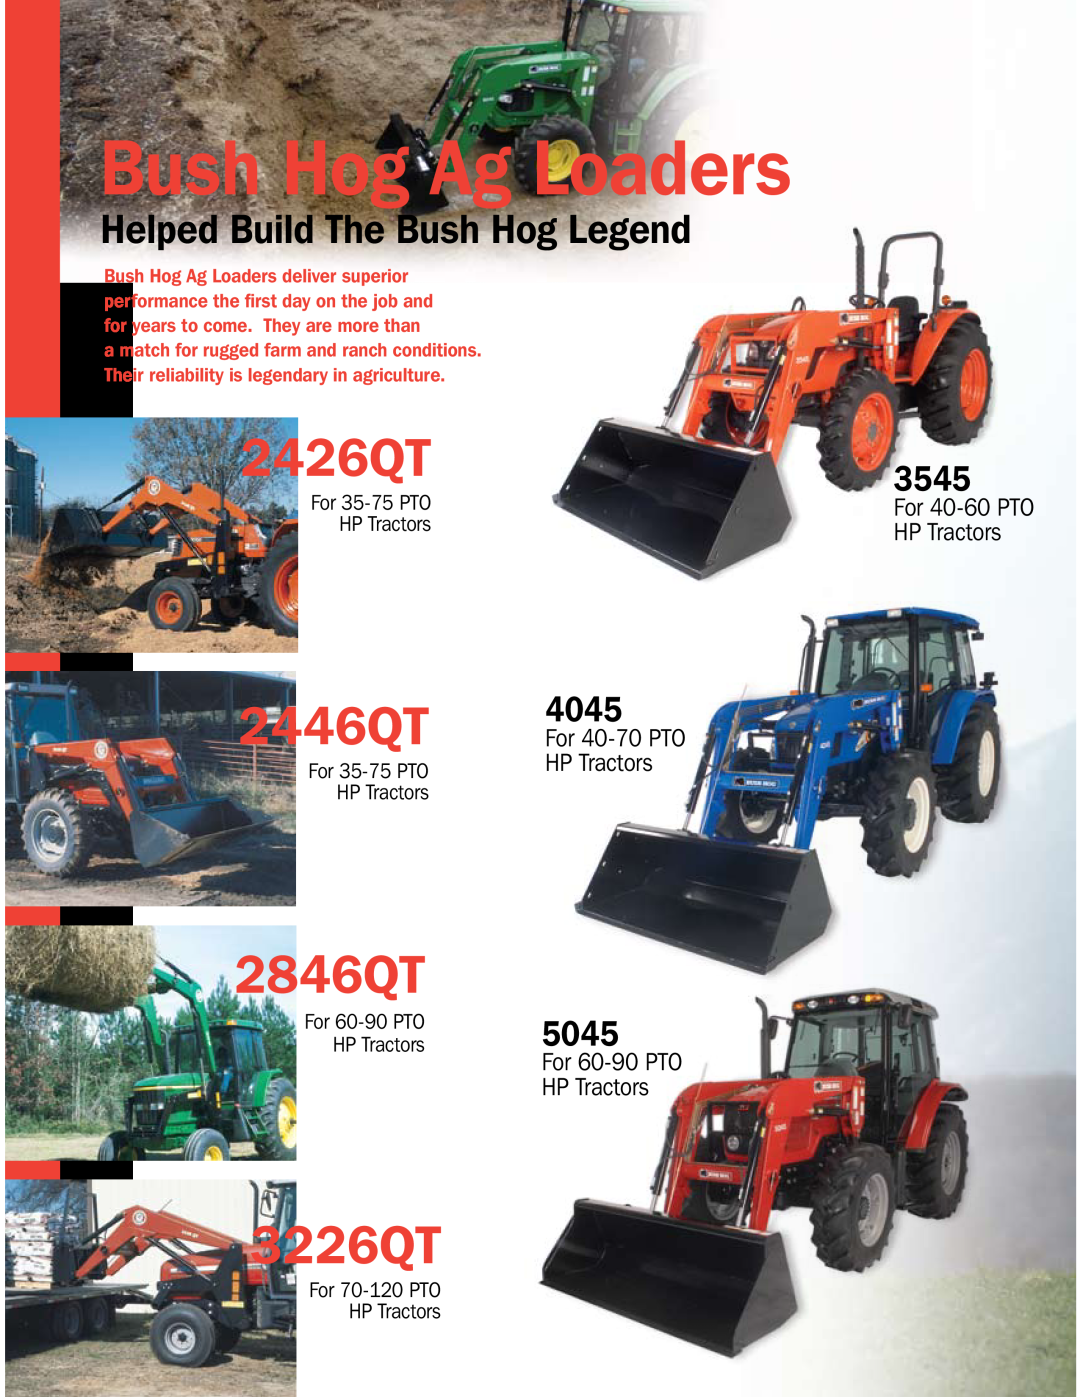 Bush Hog Compact & Ag Loaders manual 2426QT, 2446QT, 2846QT, 3226QT, Helped Build The Bush Hog Legend, 4045, 5045, 3545 